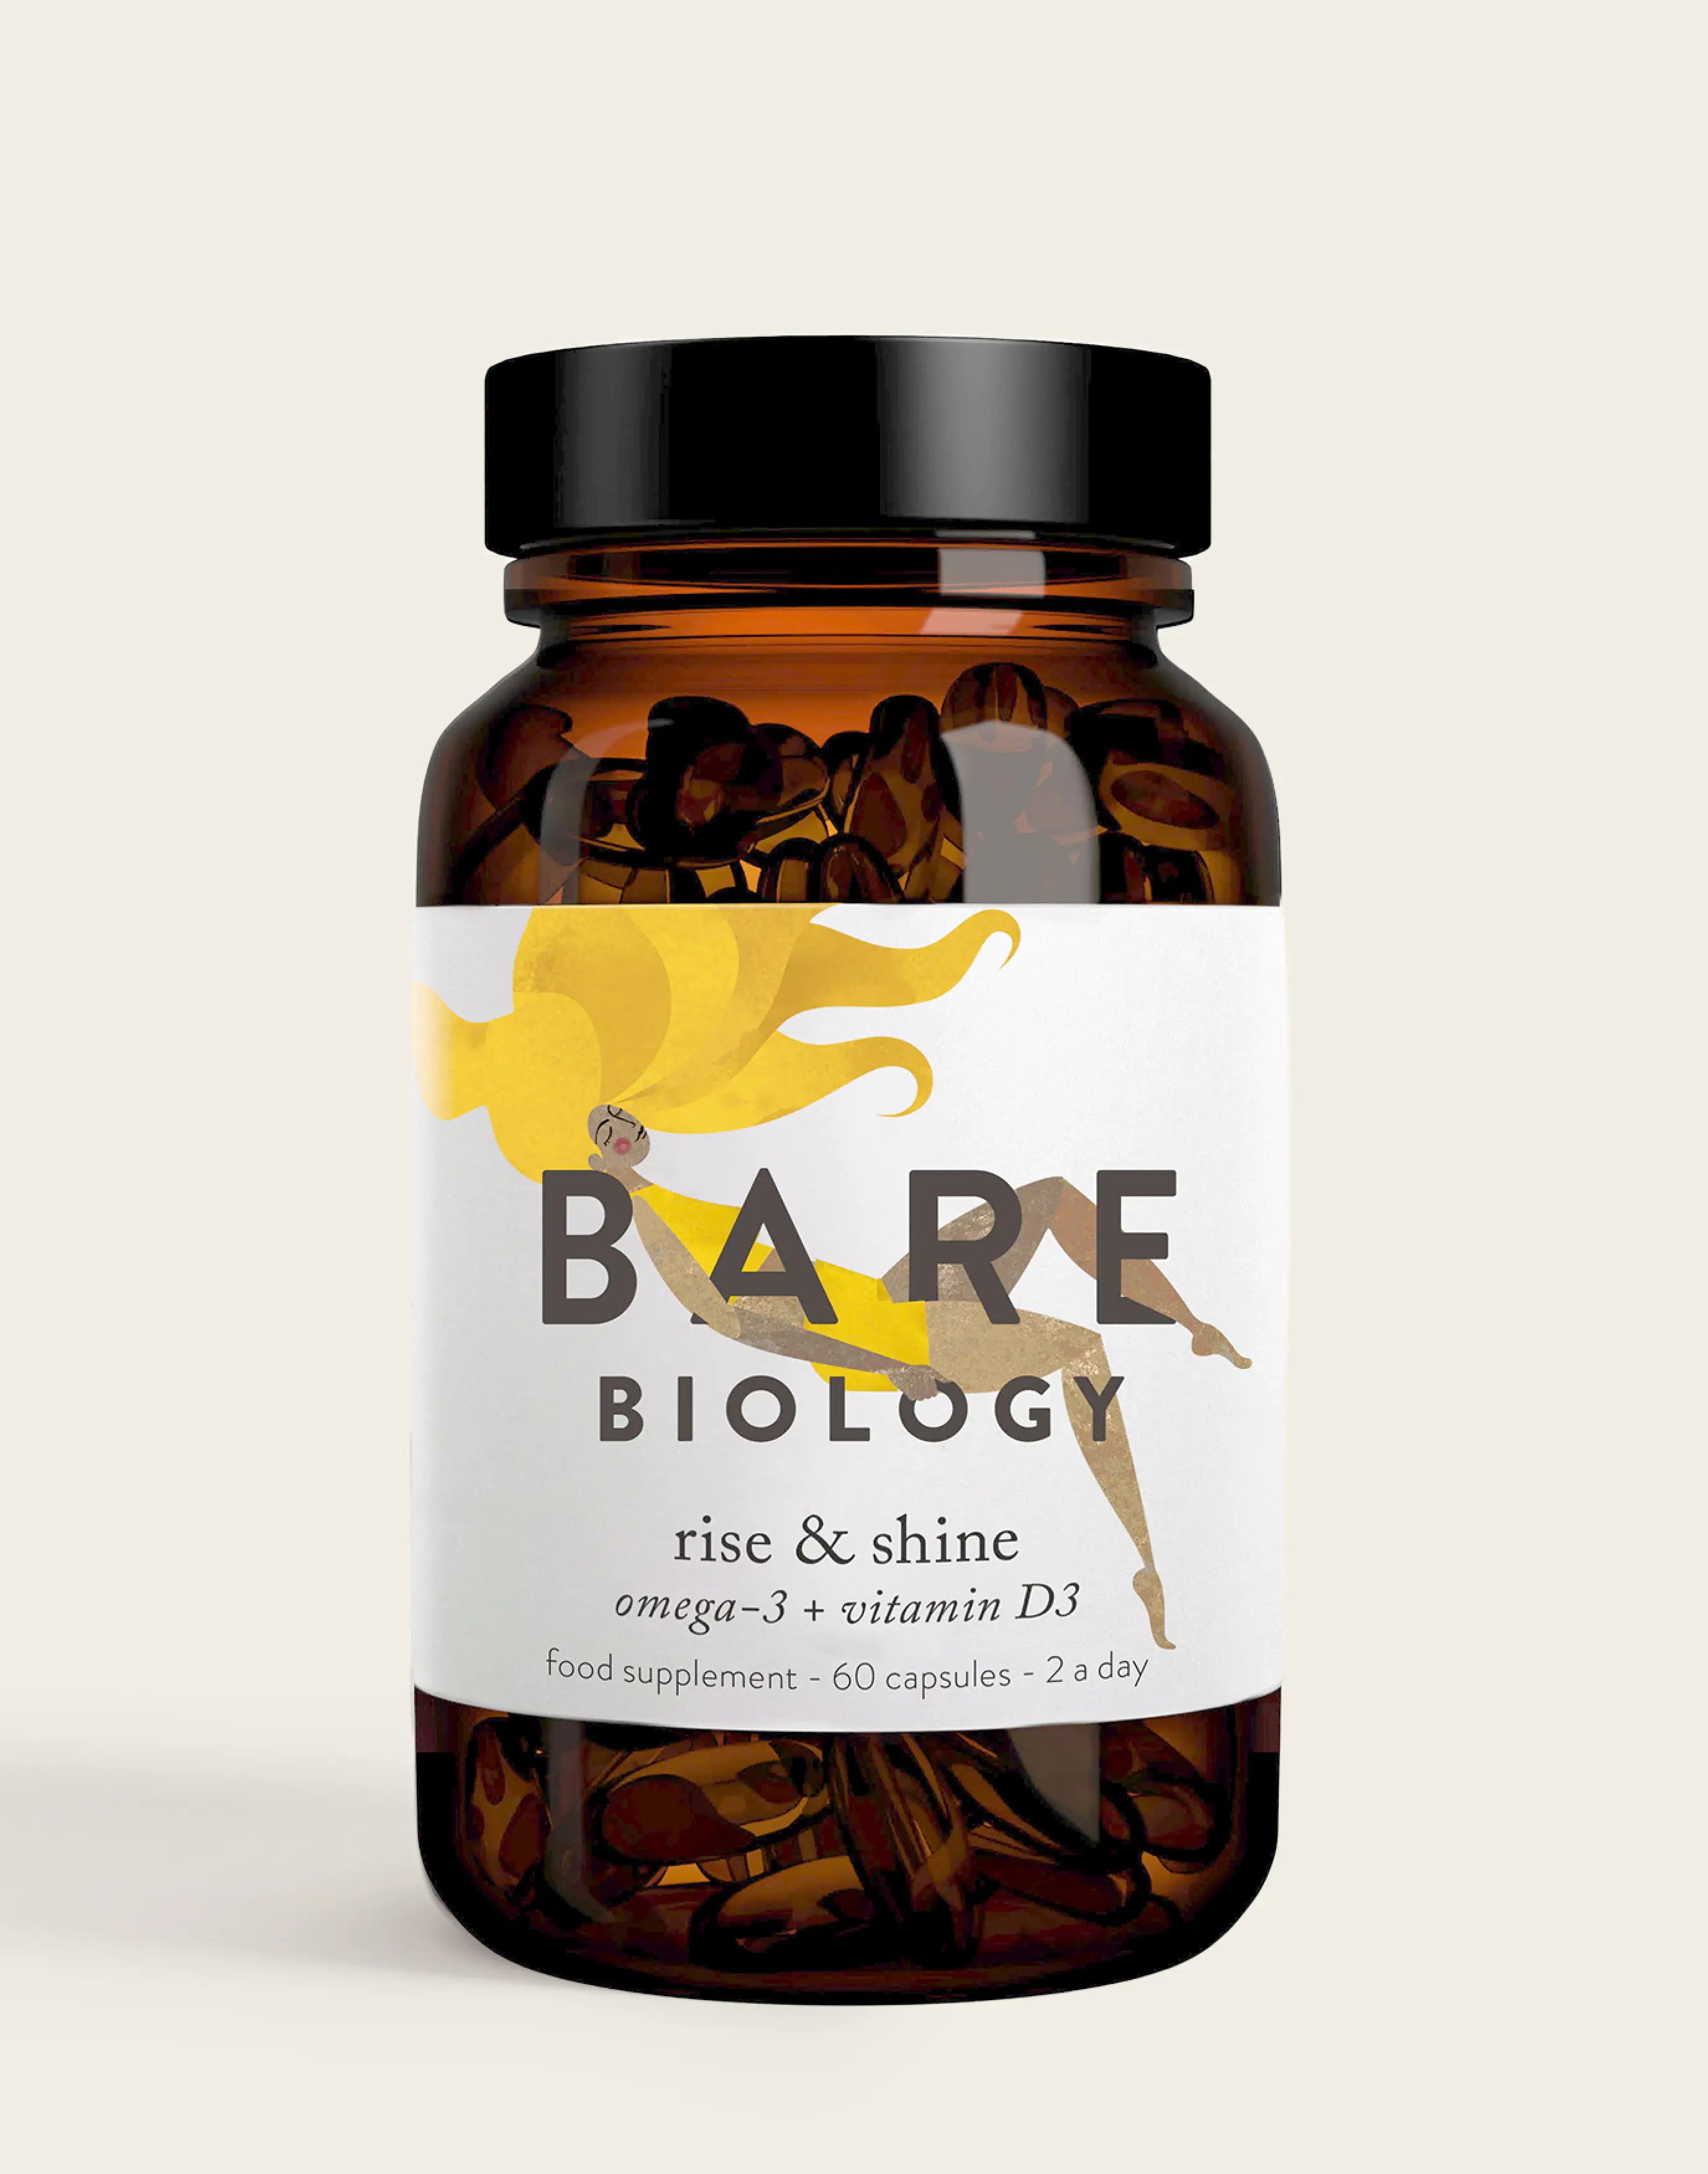 View Omega3 Vitamin D3 Capsules Rise Shine Brain Immunity Care In One 1000IU D3 1320mg Omega3 Glass Jar Bare Biology information